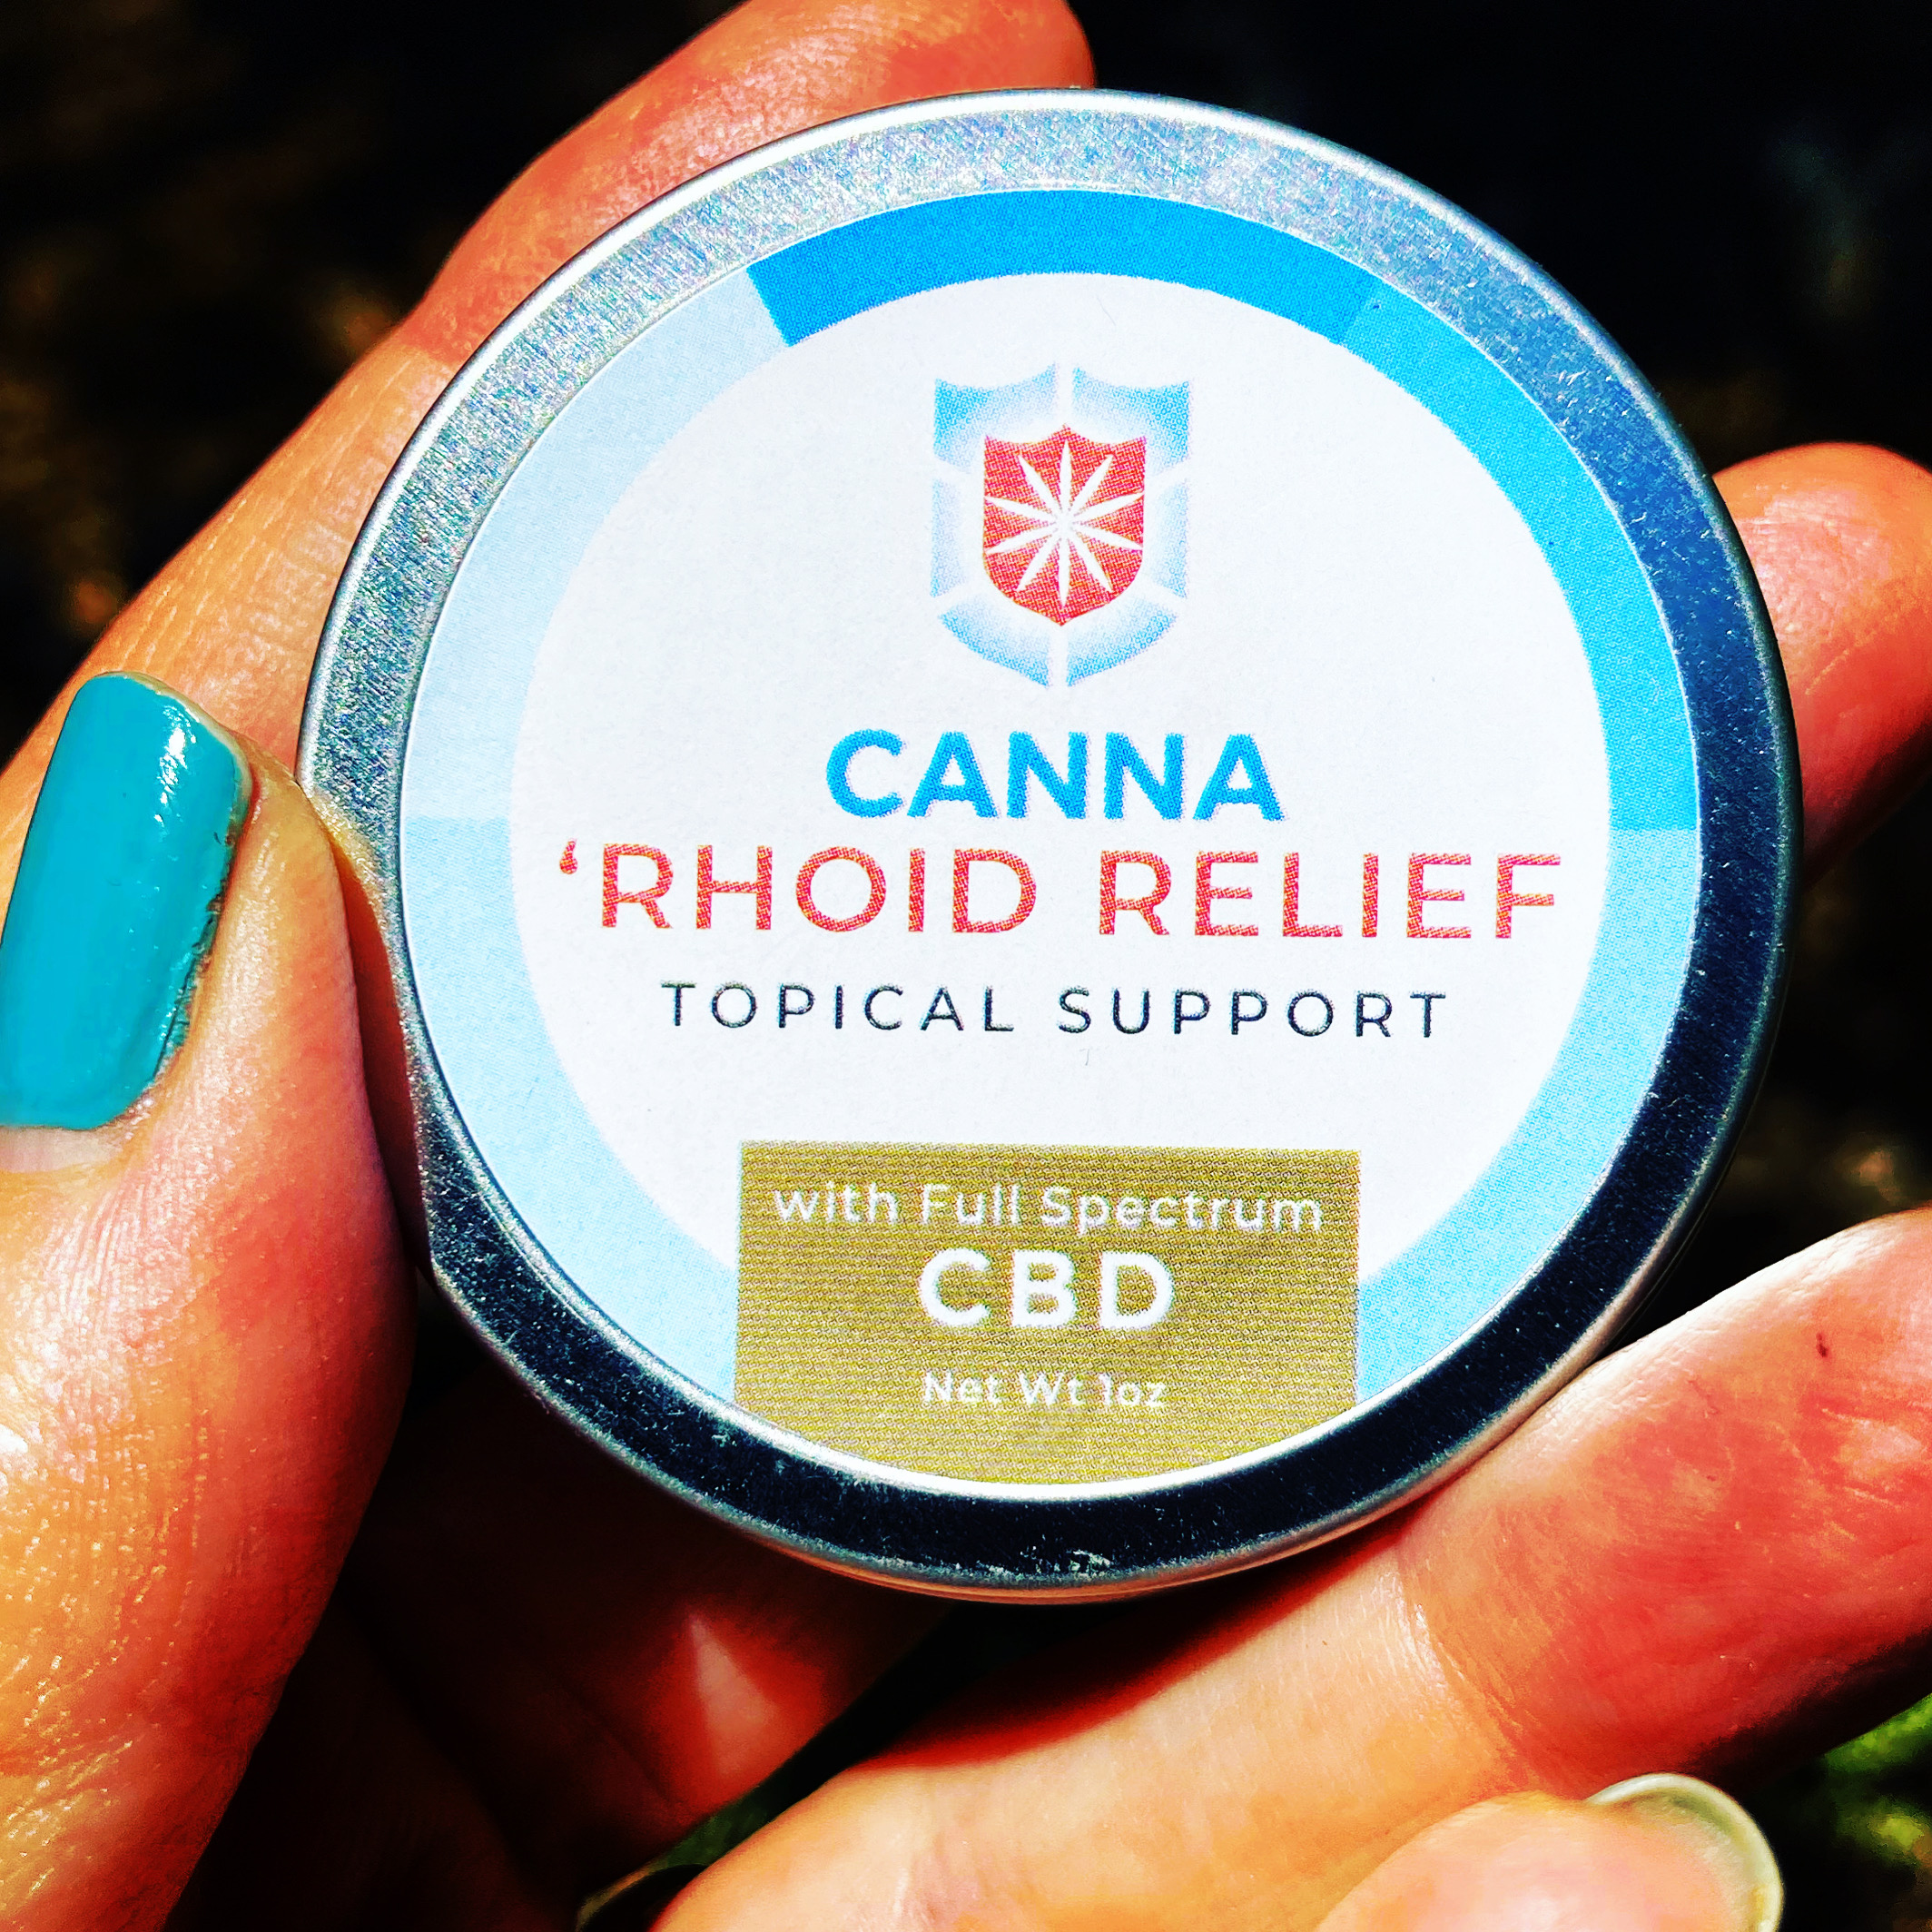 Canna 'Rhoid Relief